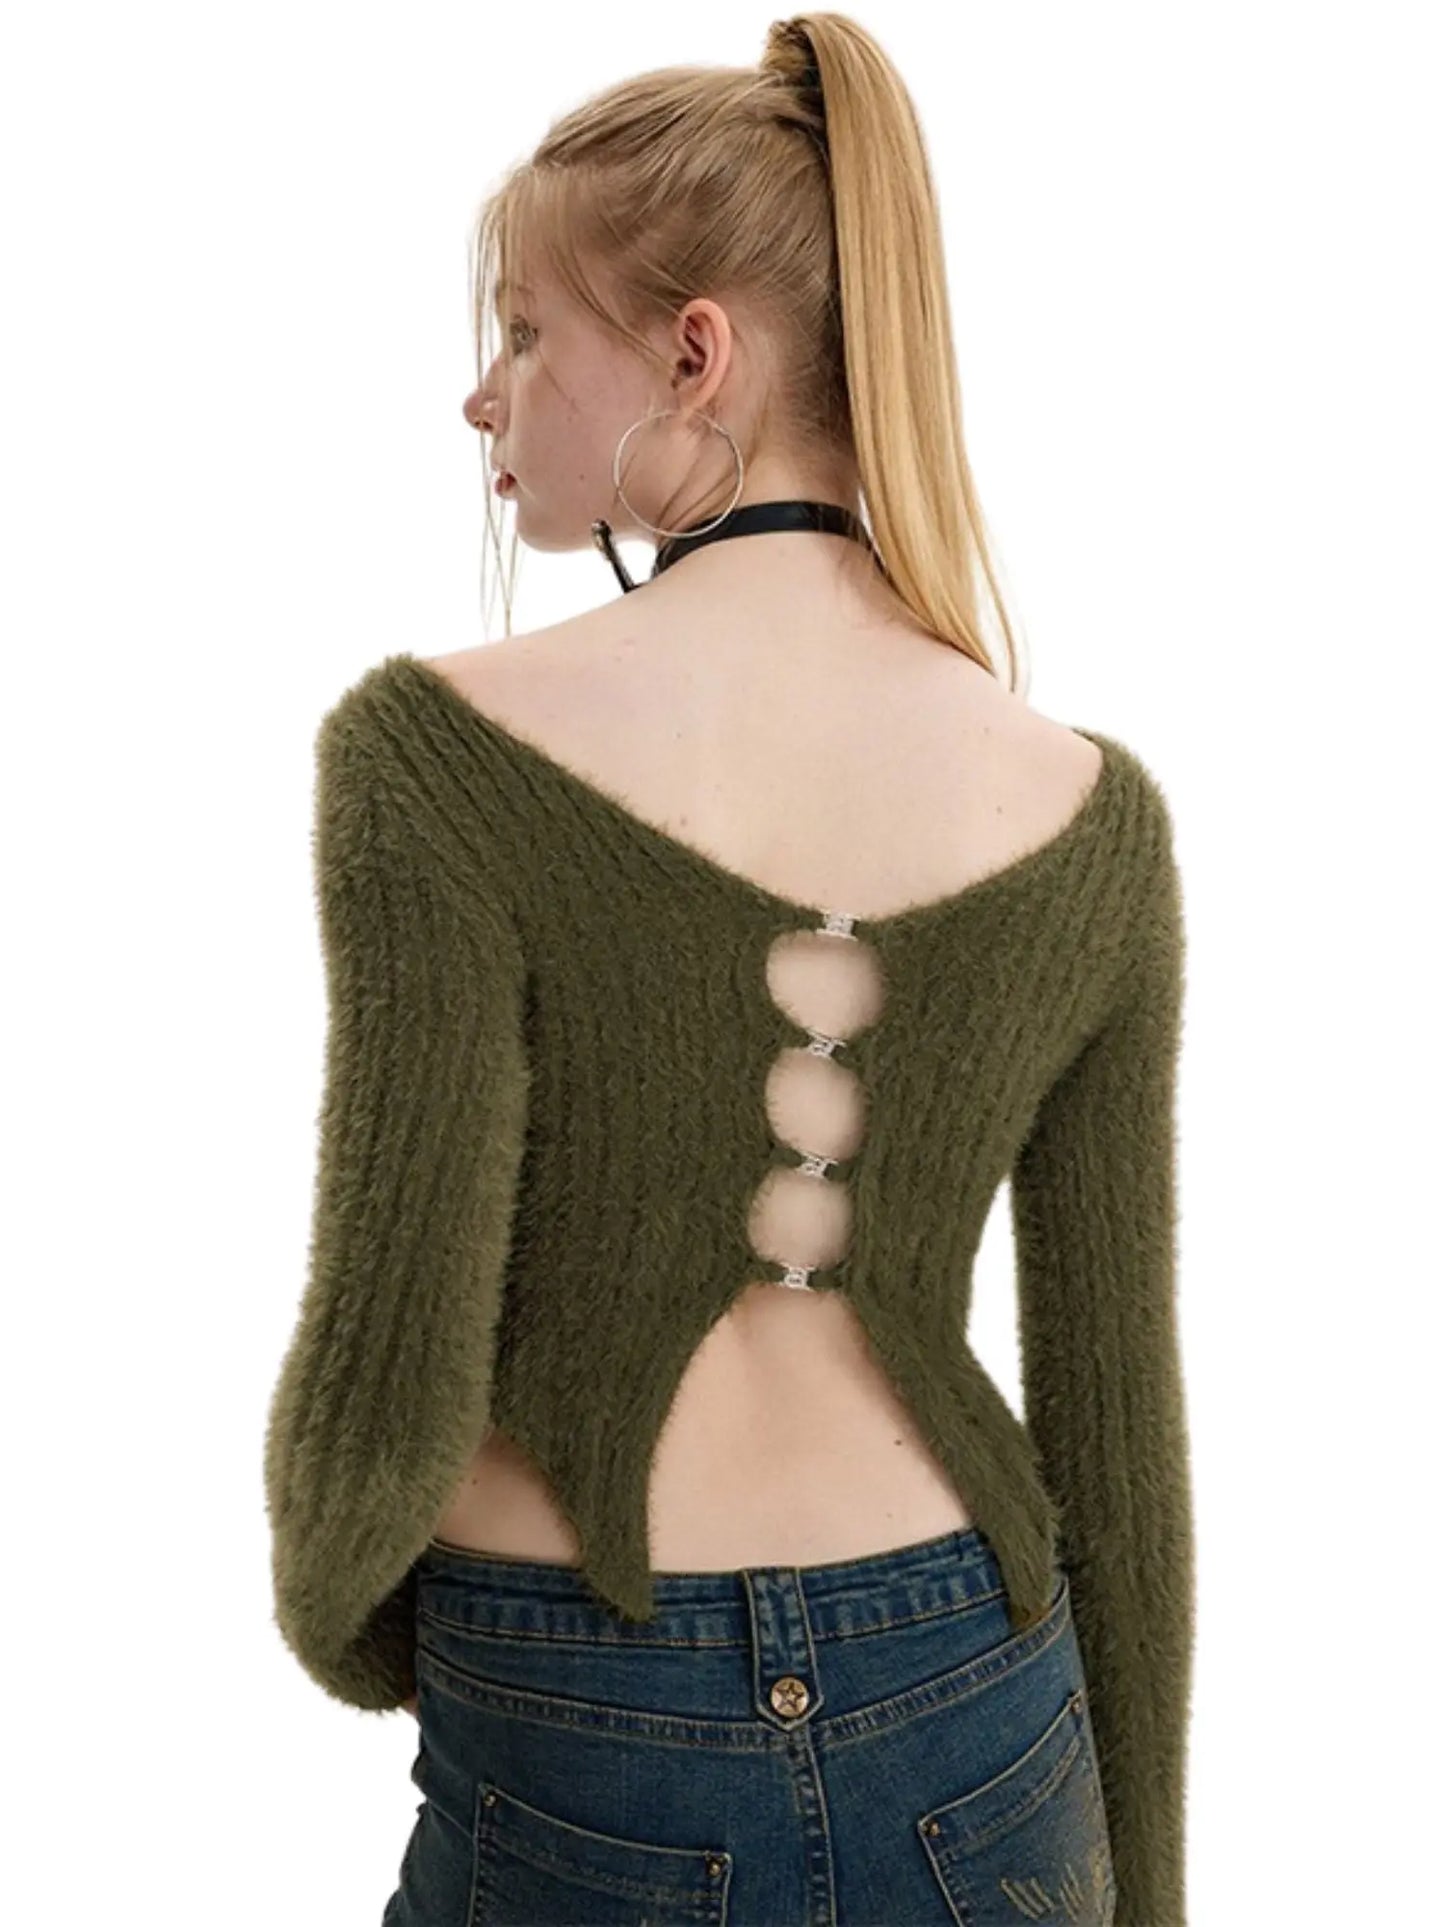 ’Hey Henry‘ Millennial Style Imitation Mink Hot Girl Sweater AlielNosirrah